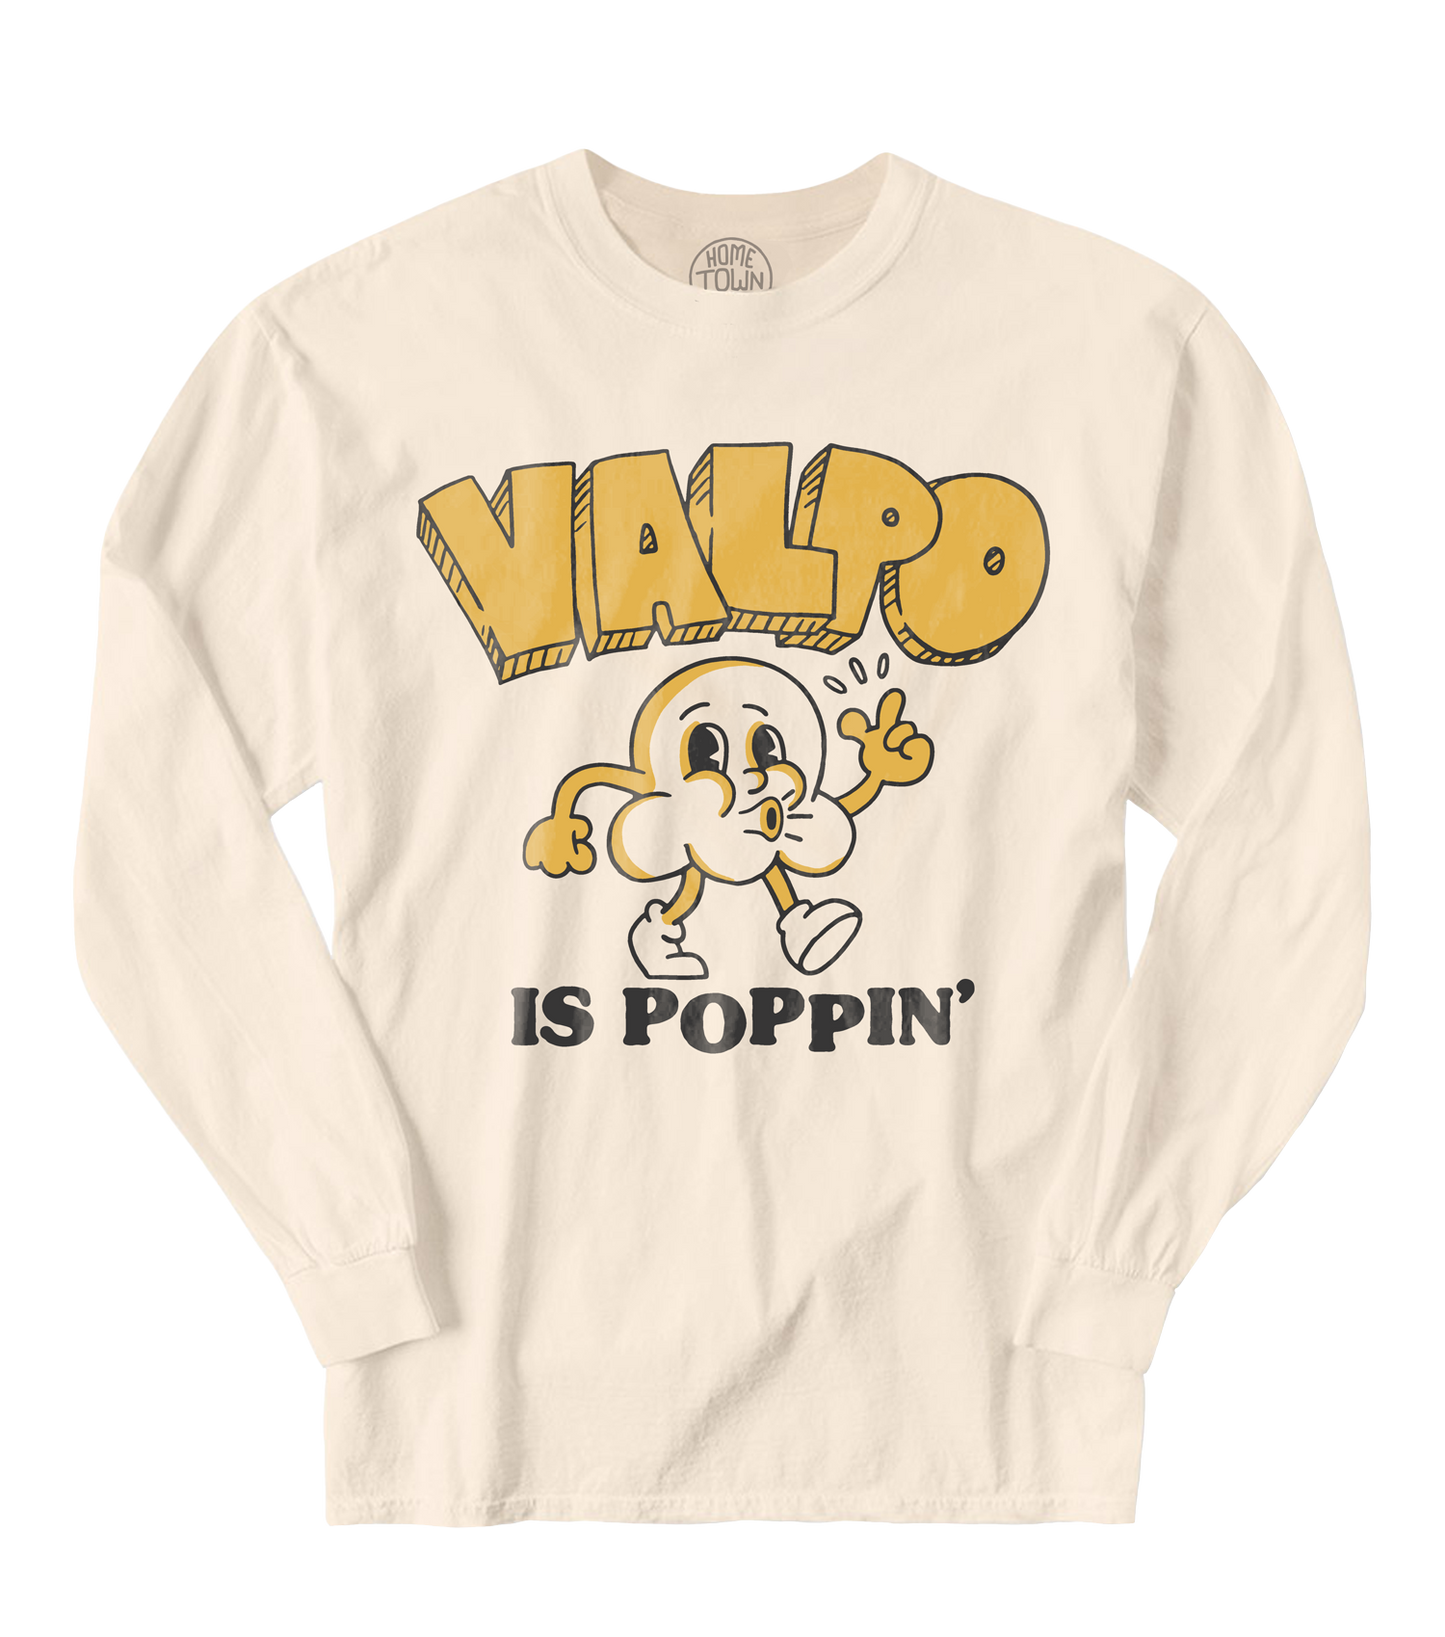 Valpo Is Poppin' Long Sleeve